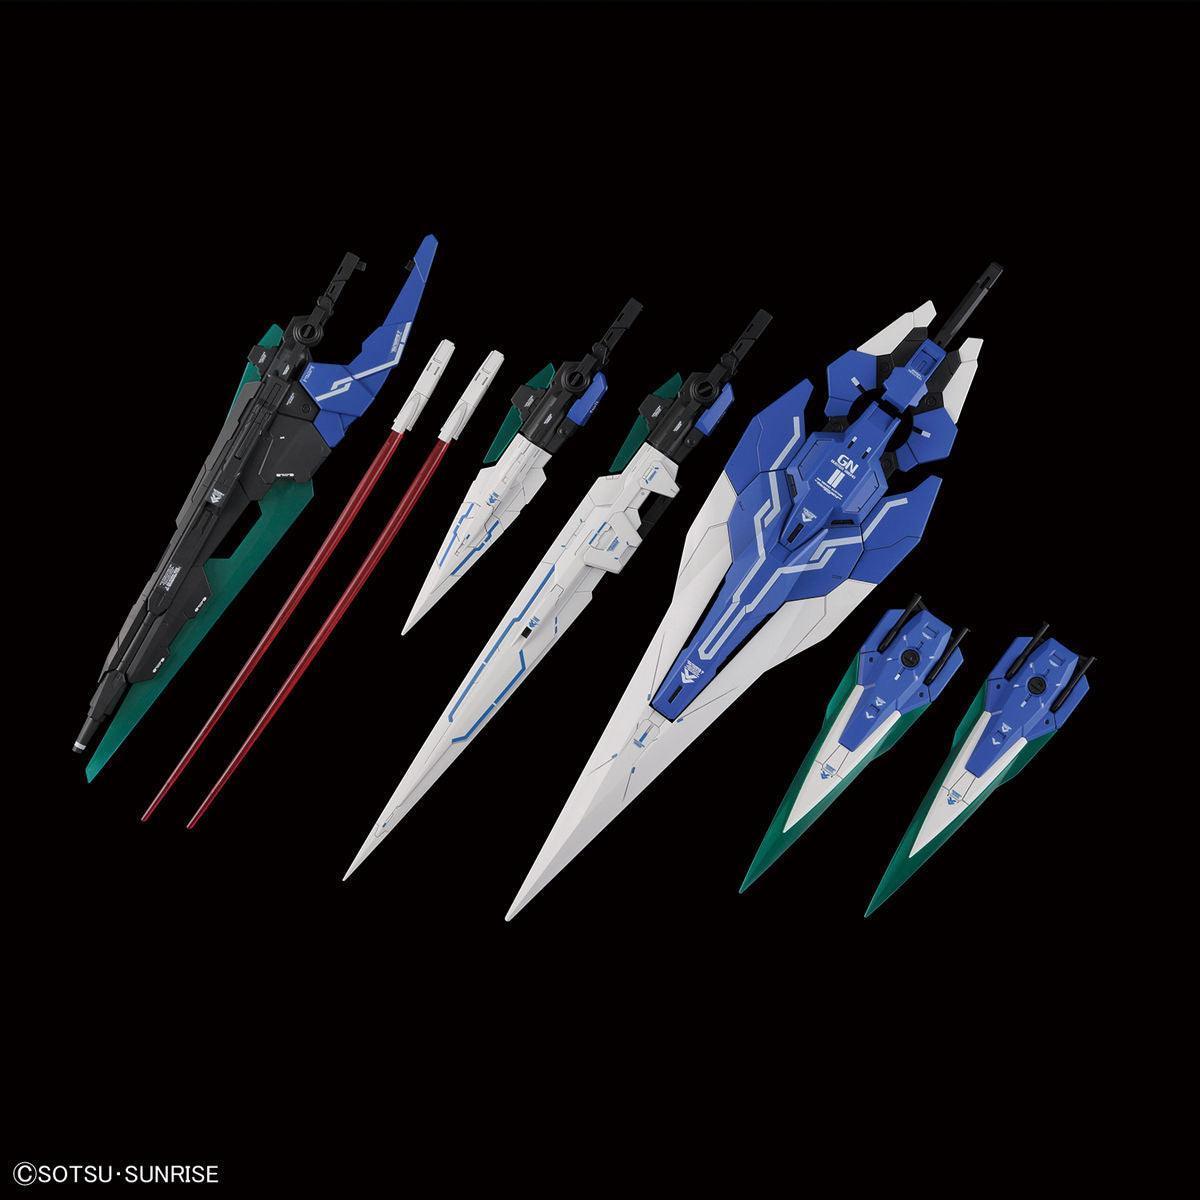 Bandai PG 1/60 No.18 GN-0000GNHW/7SG 00 Gundam Seven Sword/G - Kidultverse